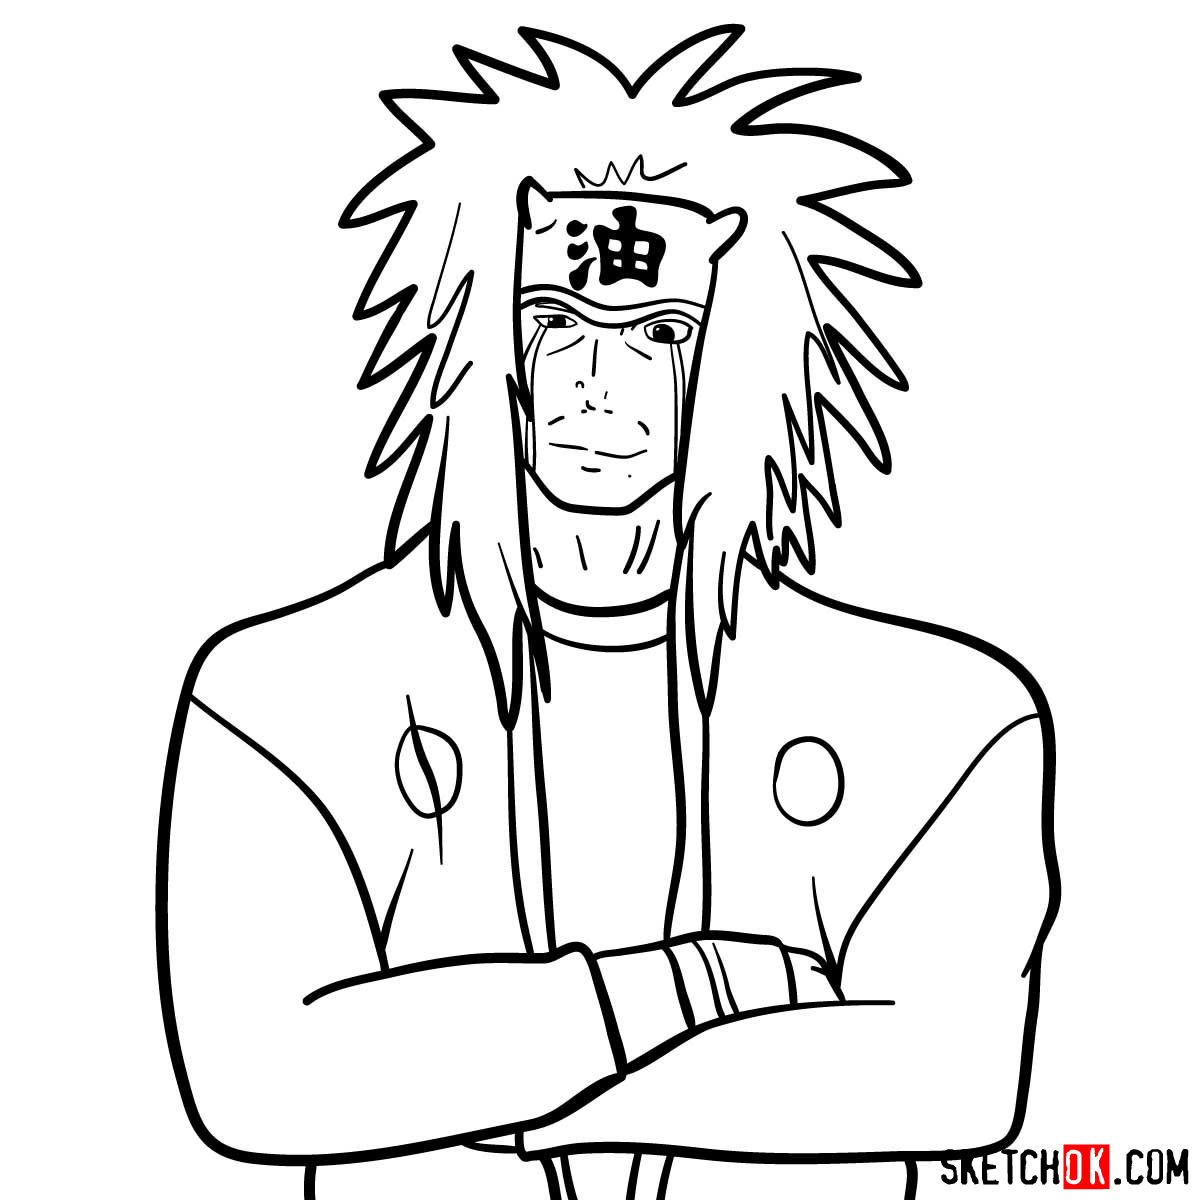 How to draw Jiraiya from Naruto anime - step 11